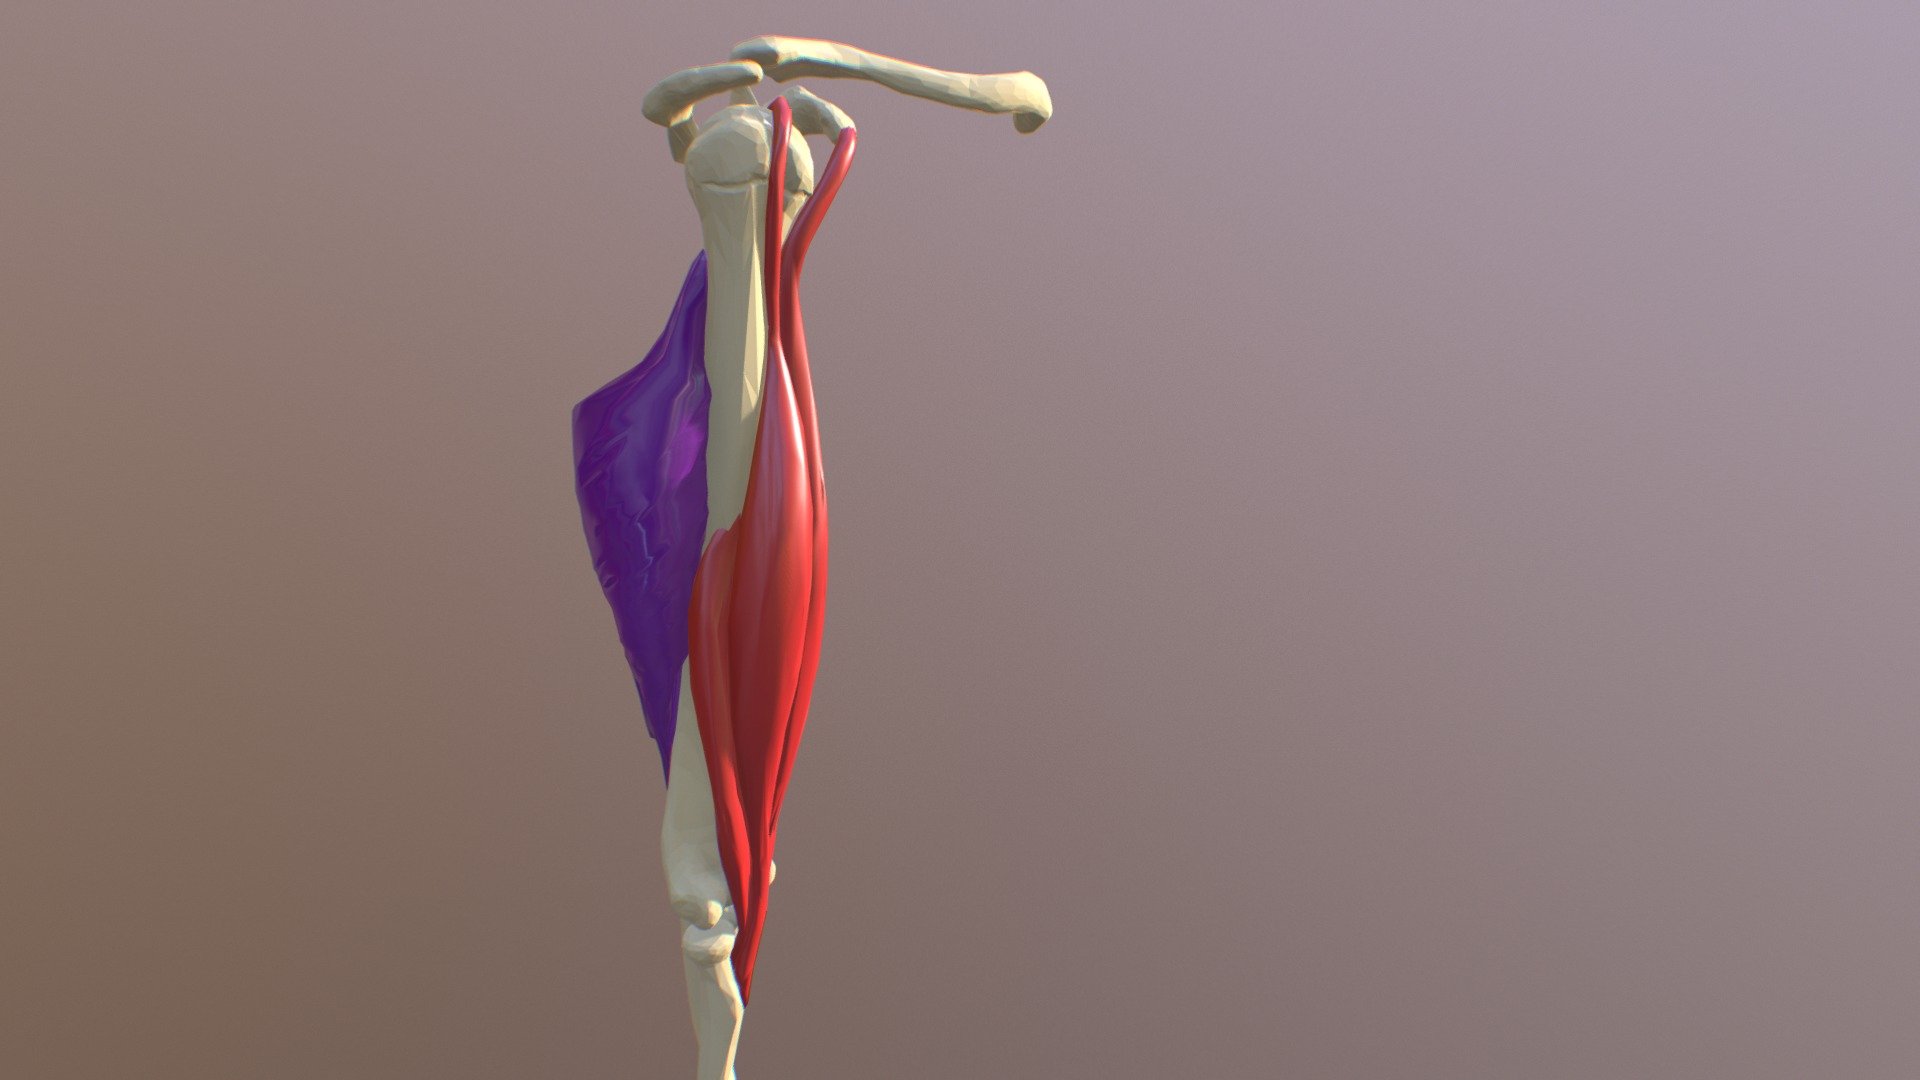 Biceps and Triceps - 3D model by chrishammang (@chrishammang) [1f23b4e]